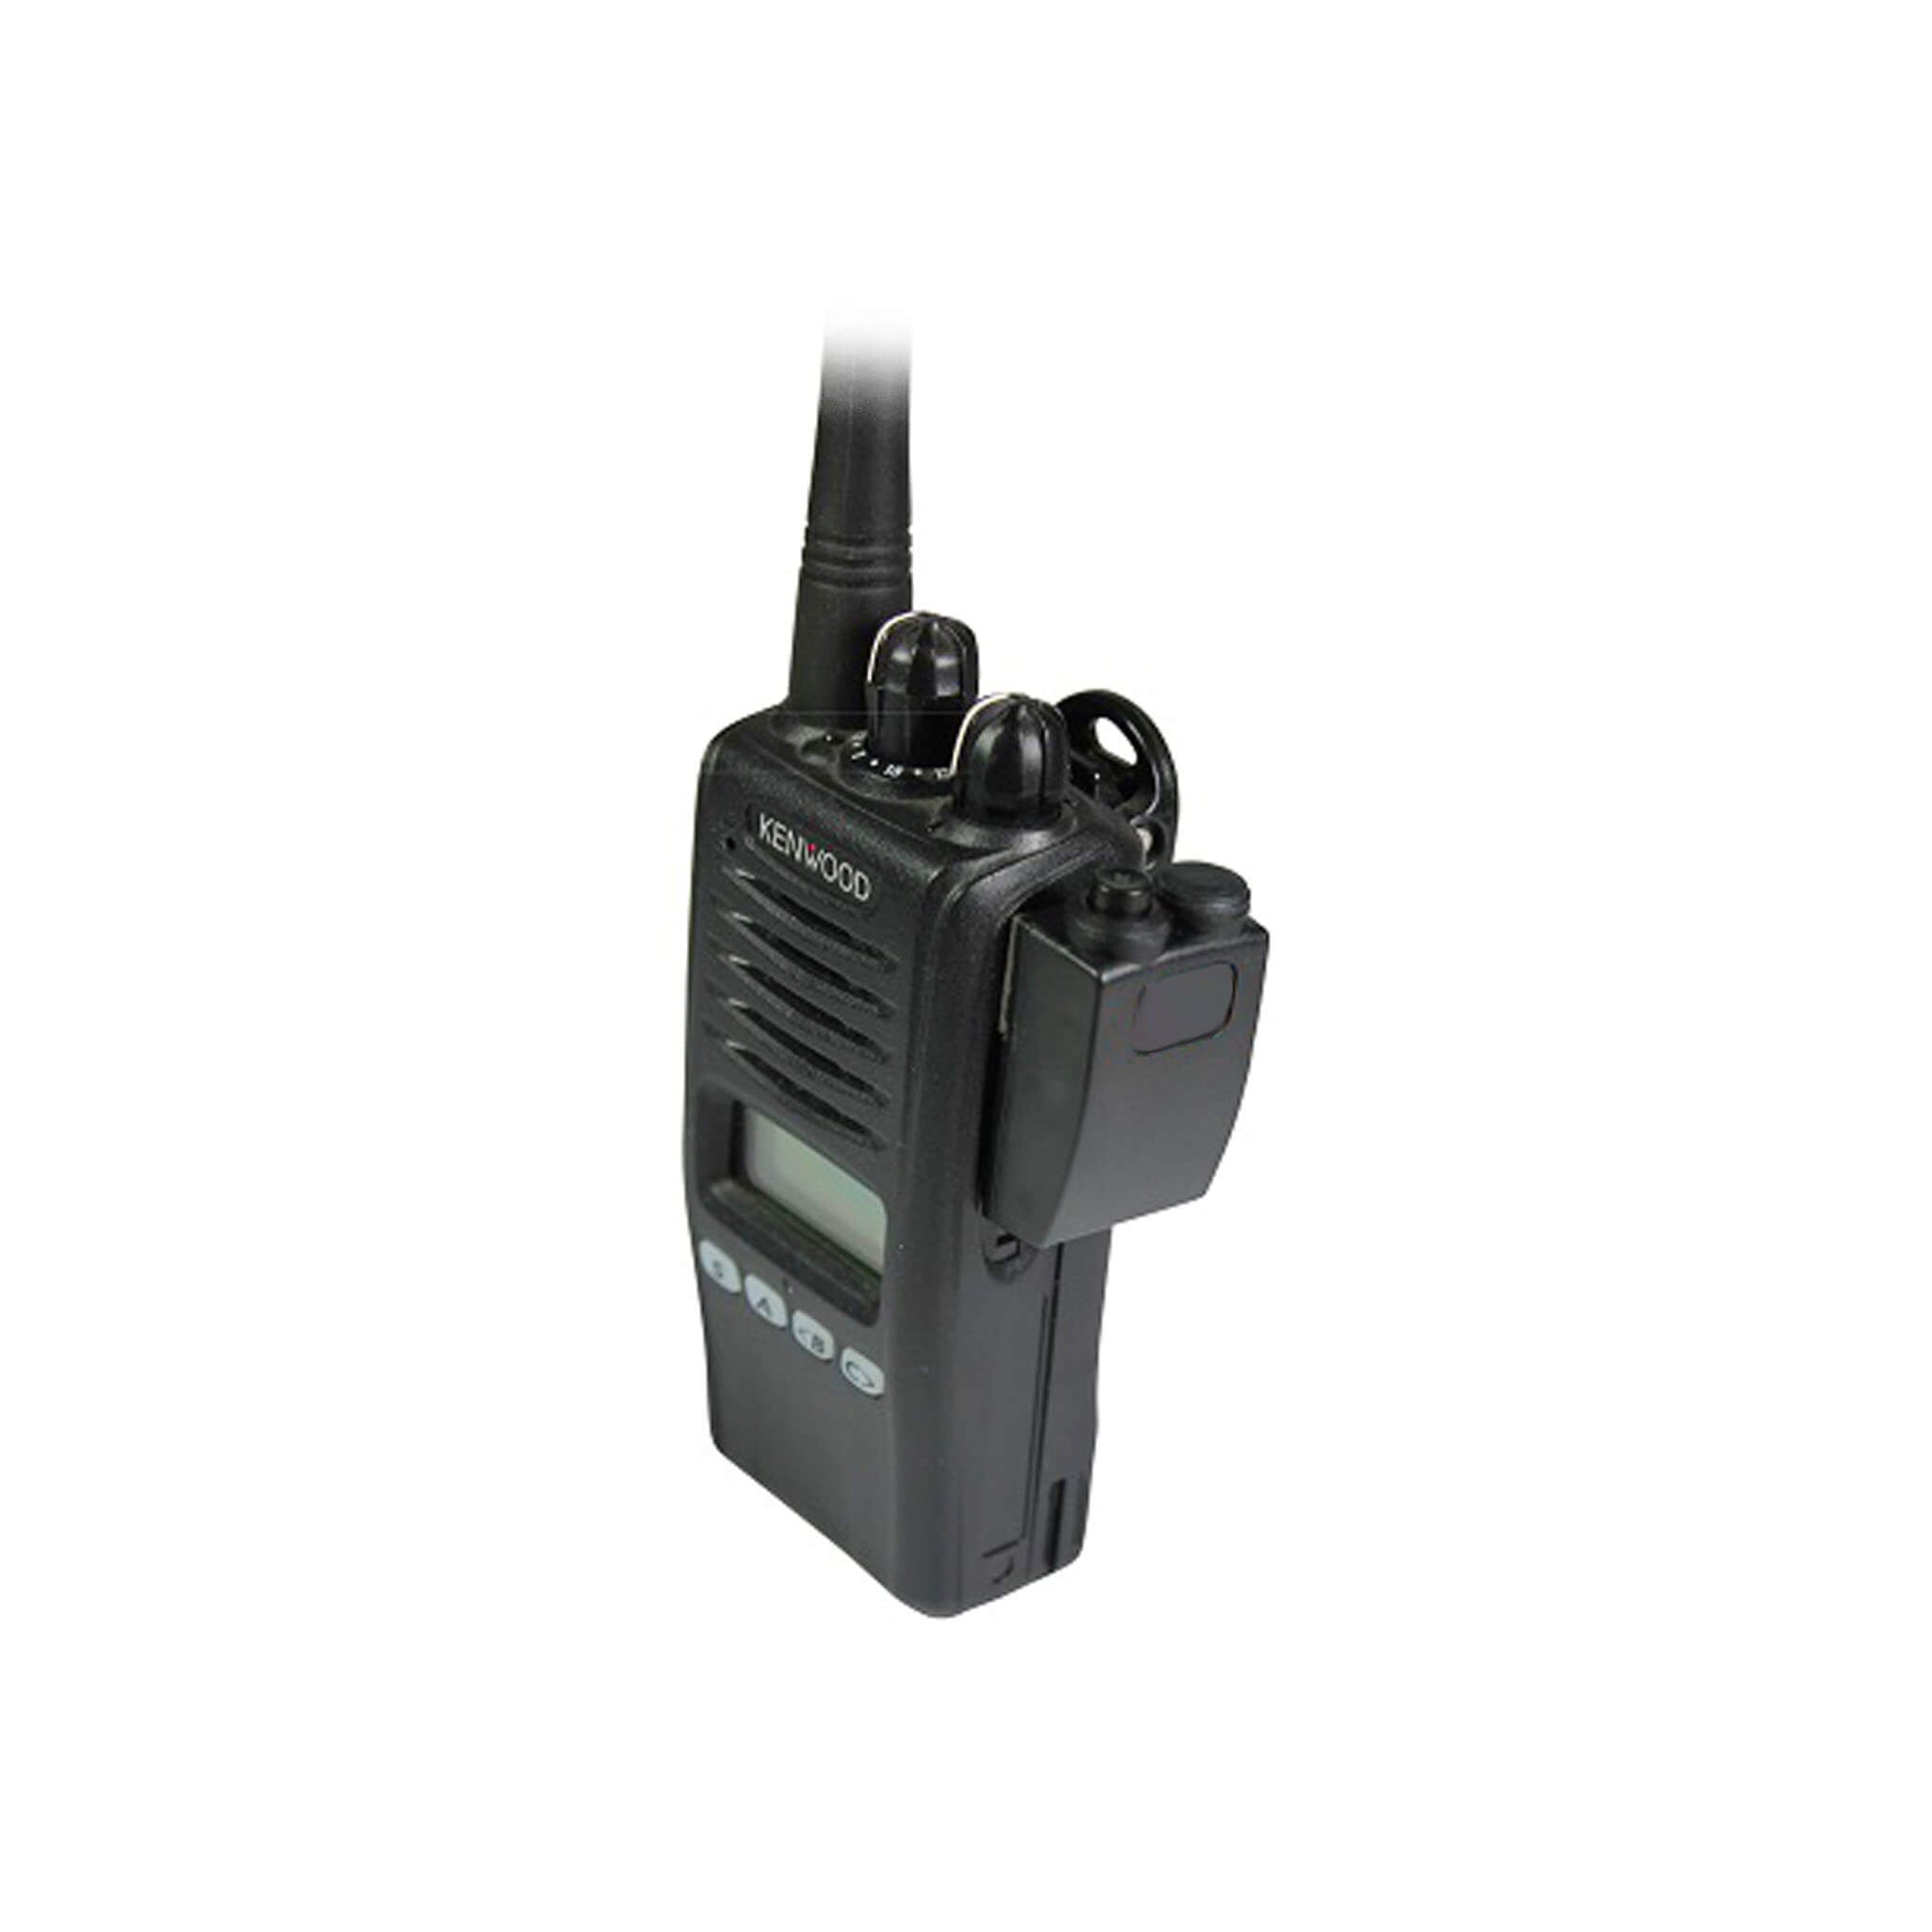 Bluetooth Adapter For Mic/Earpiece : Kenwood, Baofeng, – Comm Gear Supply